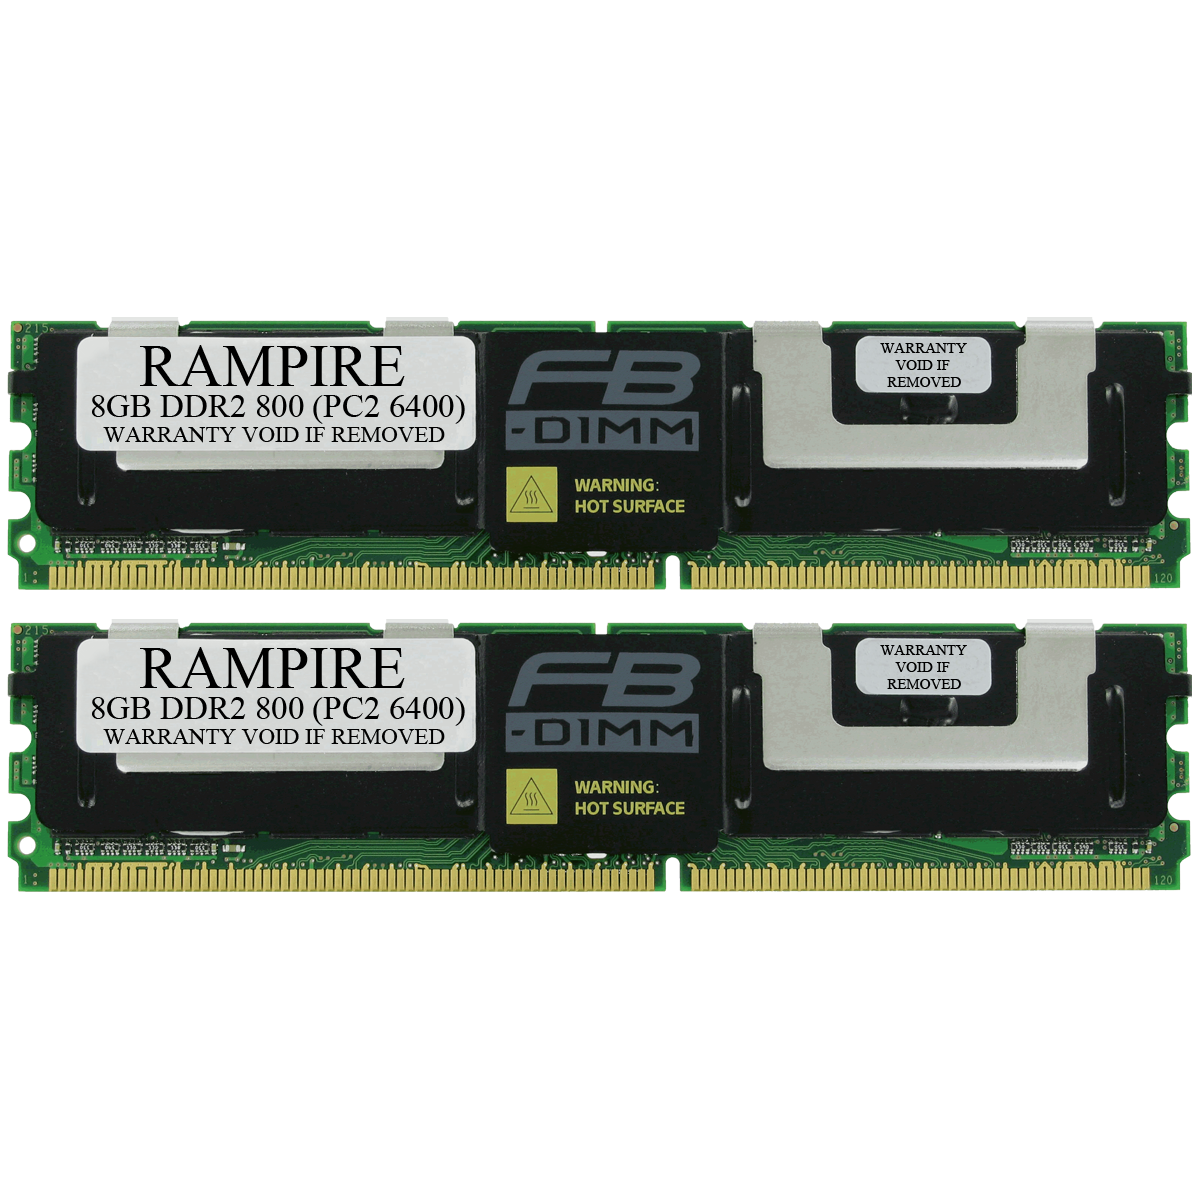 RAMPIRE 16GB (2 x 8GB) DDR2 800 (PC2 6400) 240-Pin SDRAM 2Rx4 Standard Profile 1.8V ECC Fully Buffered Server Memory